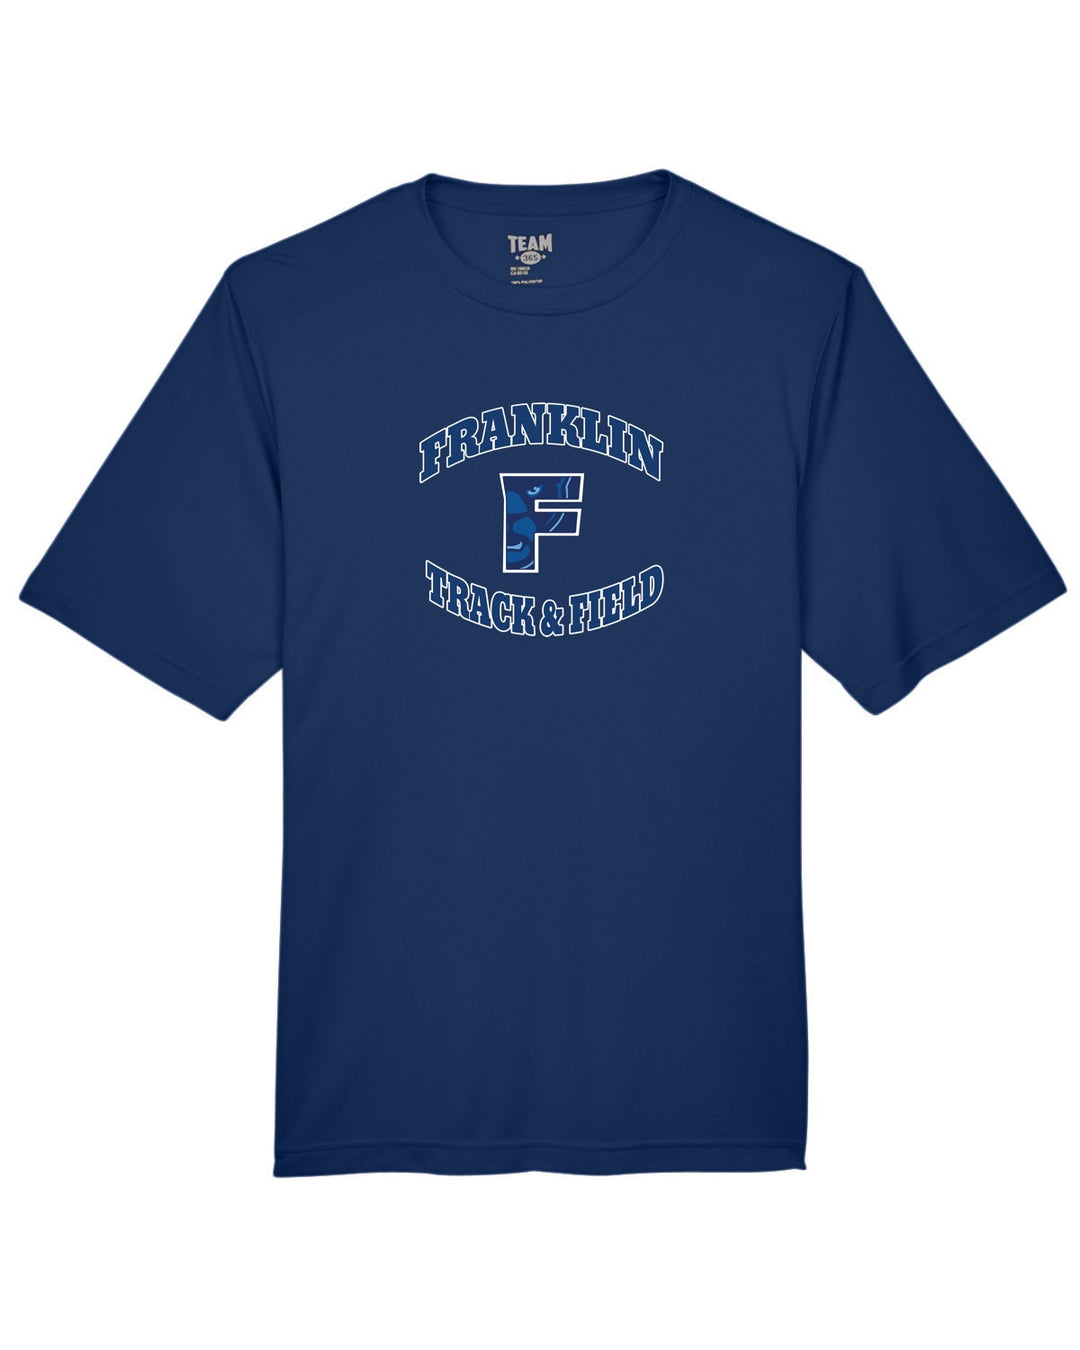 Franklin Track & Field - Team 365 Men's Zone Performance T-Shirt (TT11)